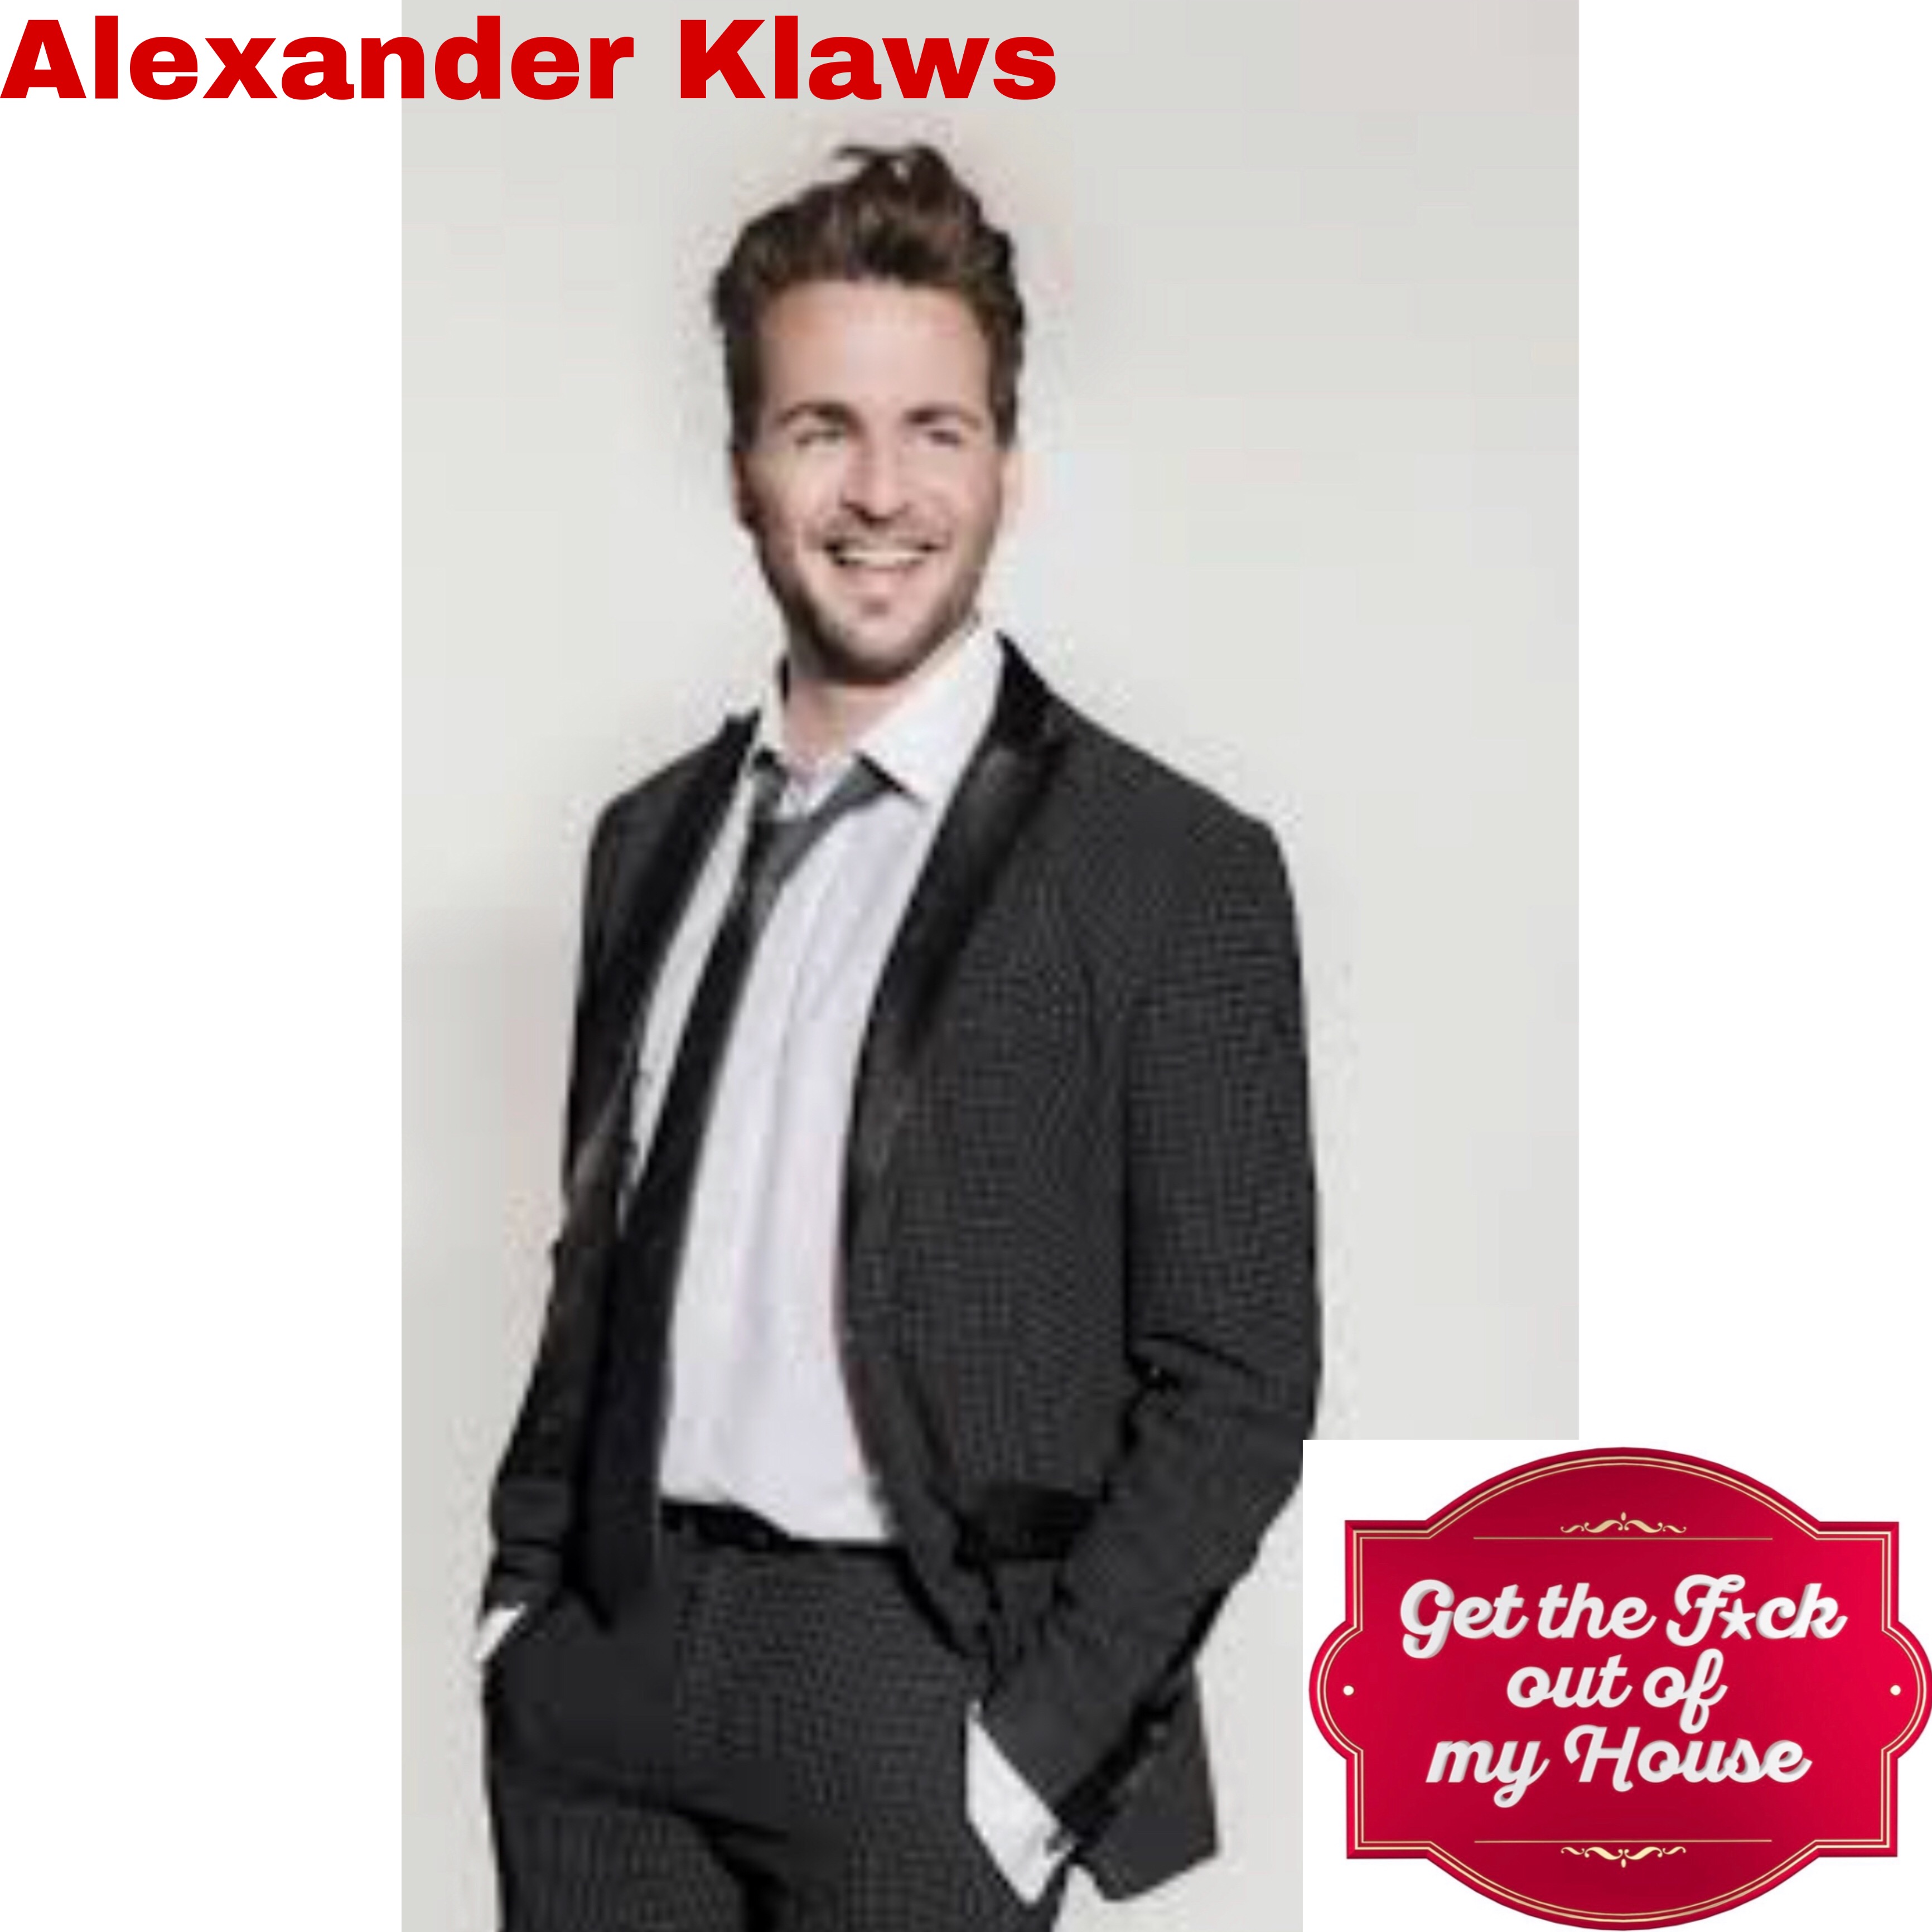 03. Alexander Klaws